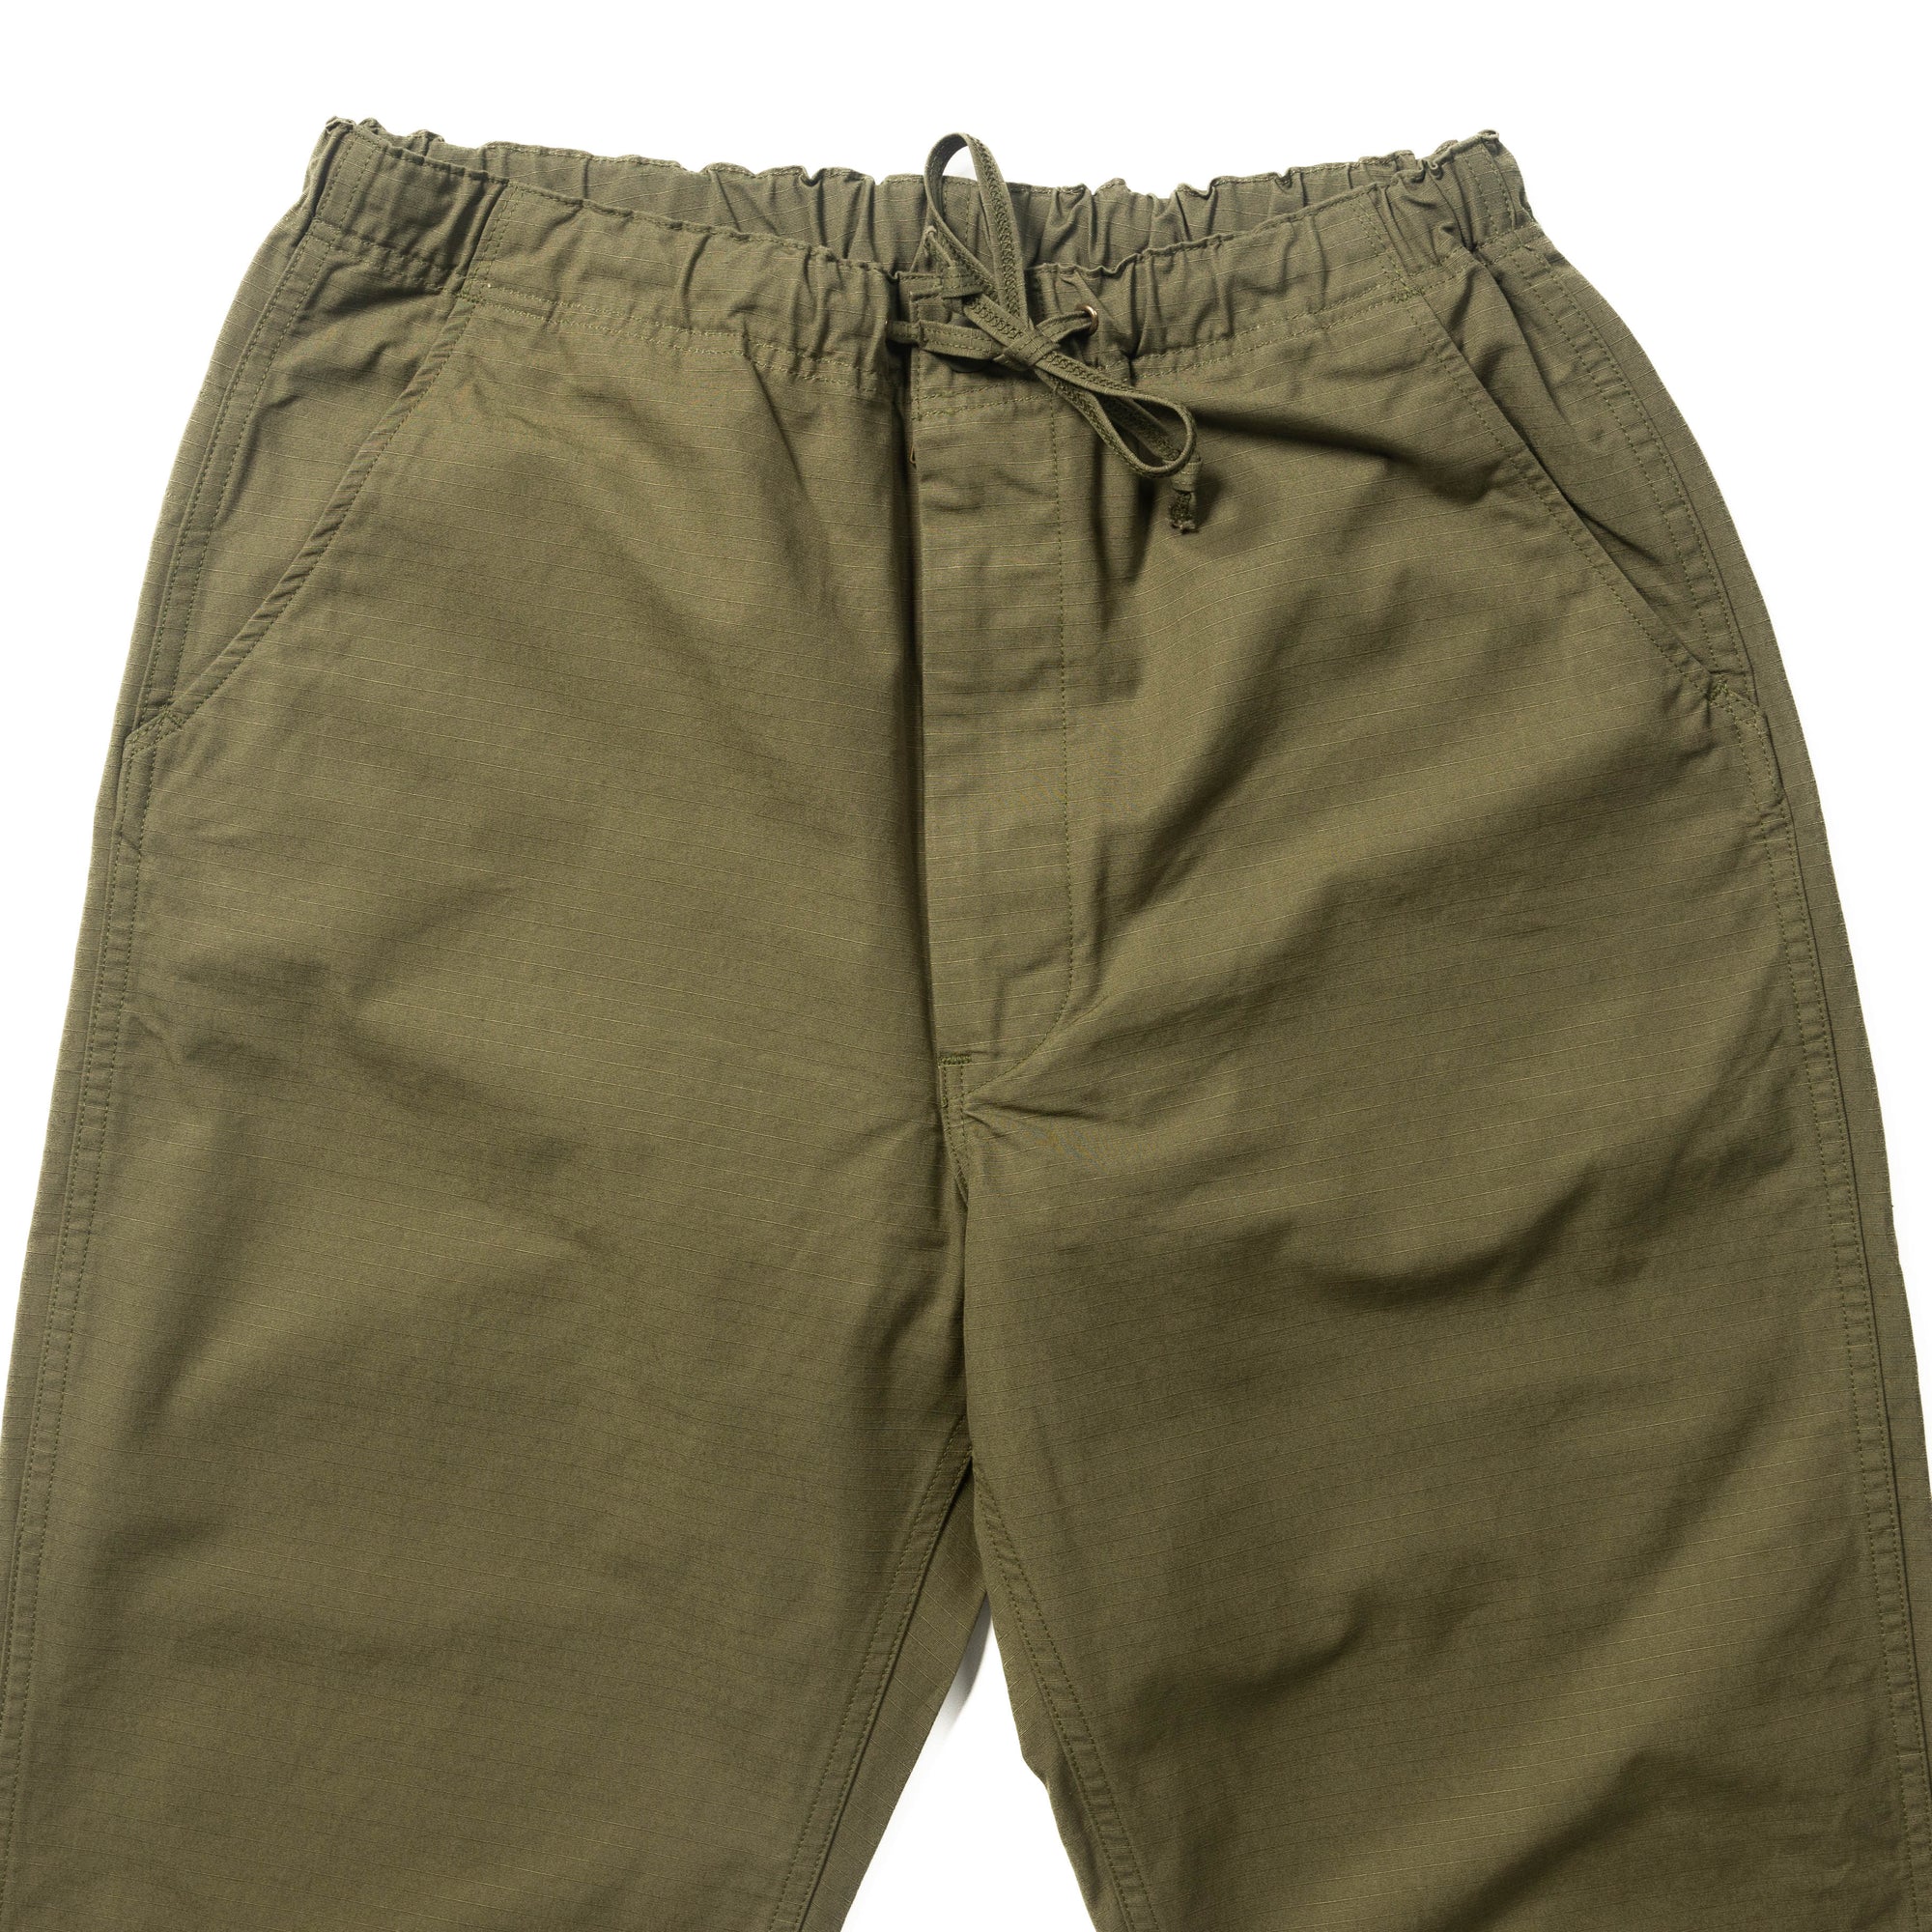 OrSlow New Yorker Shorts - Army Green - Standard & Strange